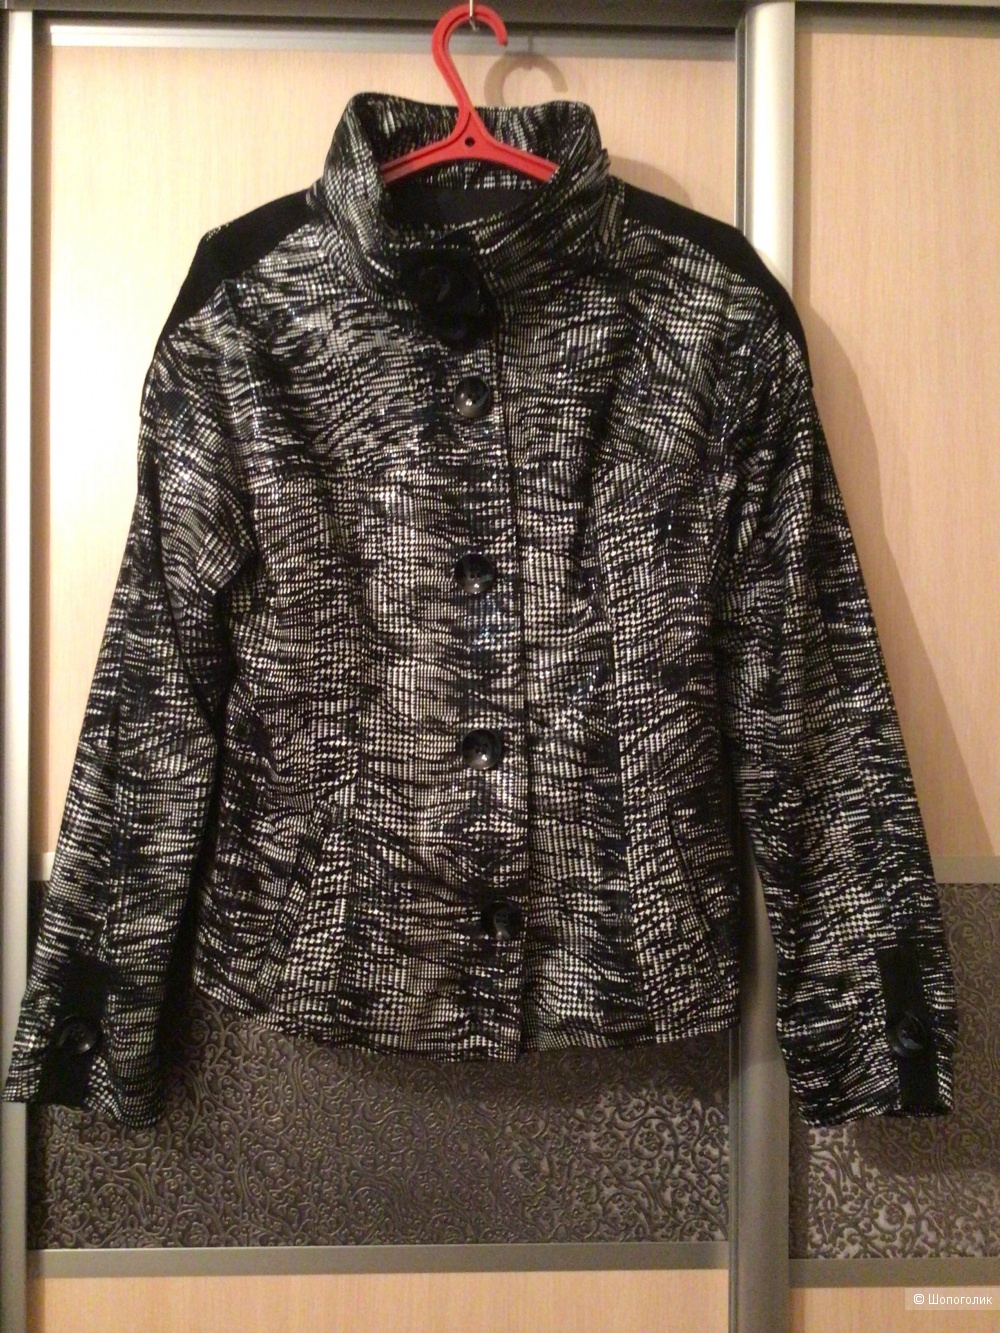 Кожаная куртка IVAGIO, размер 44-46 Росс.